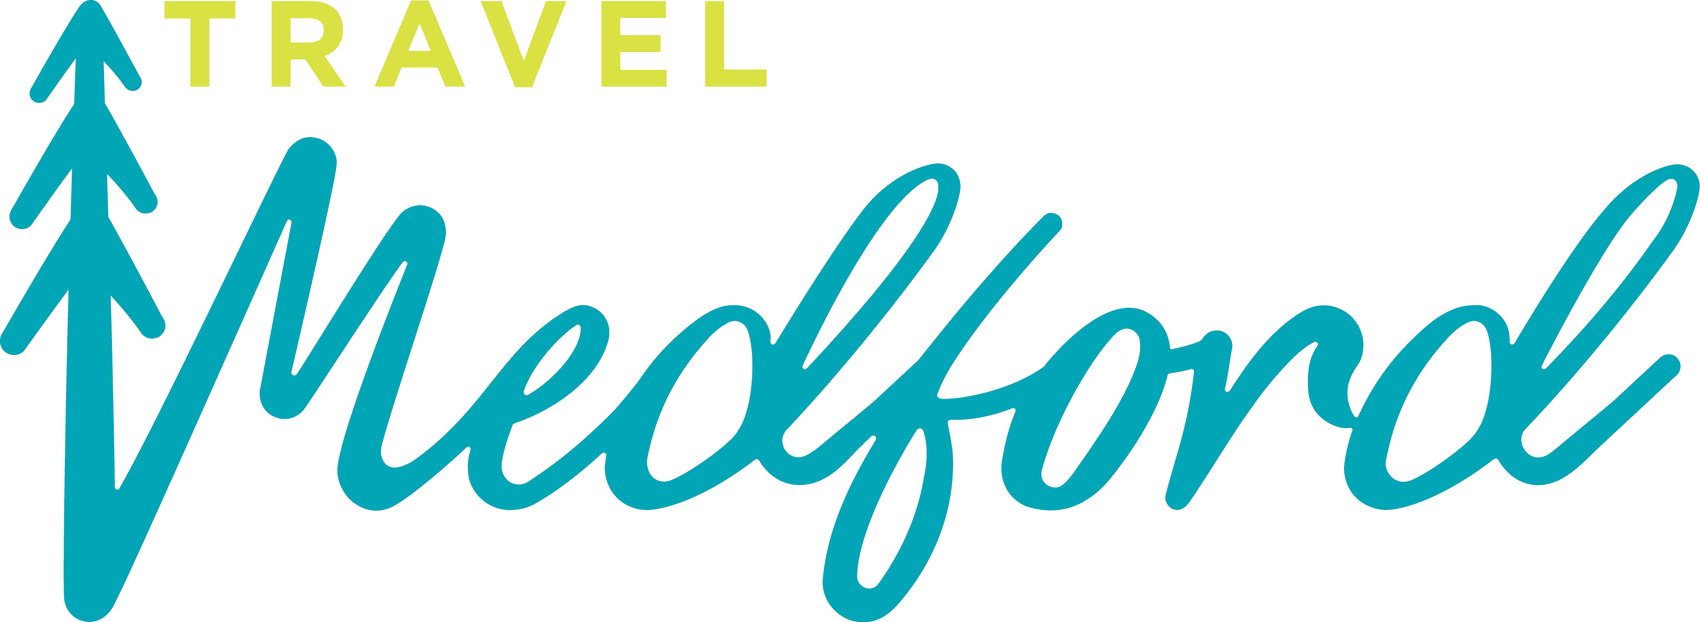 travel medford logo